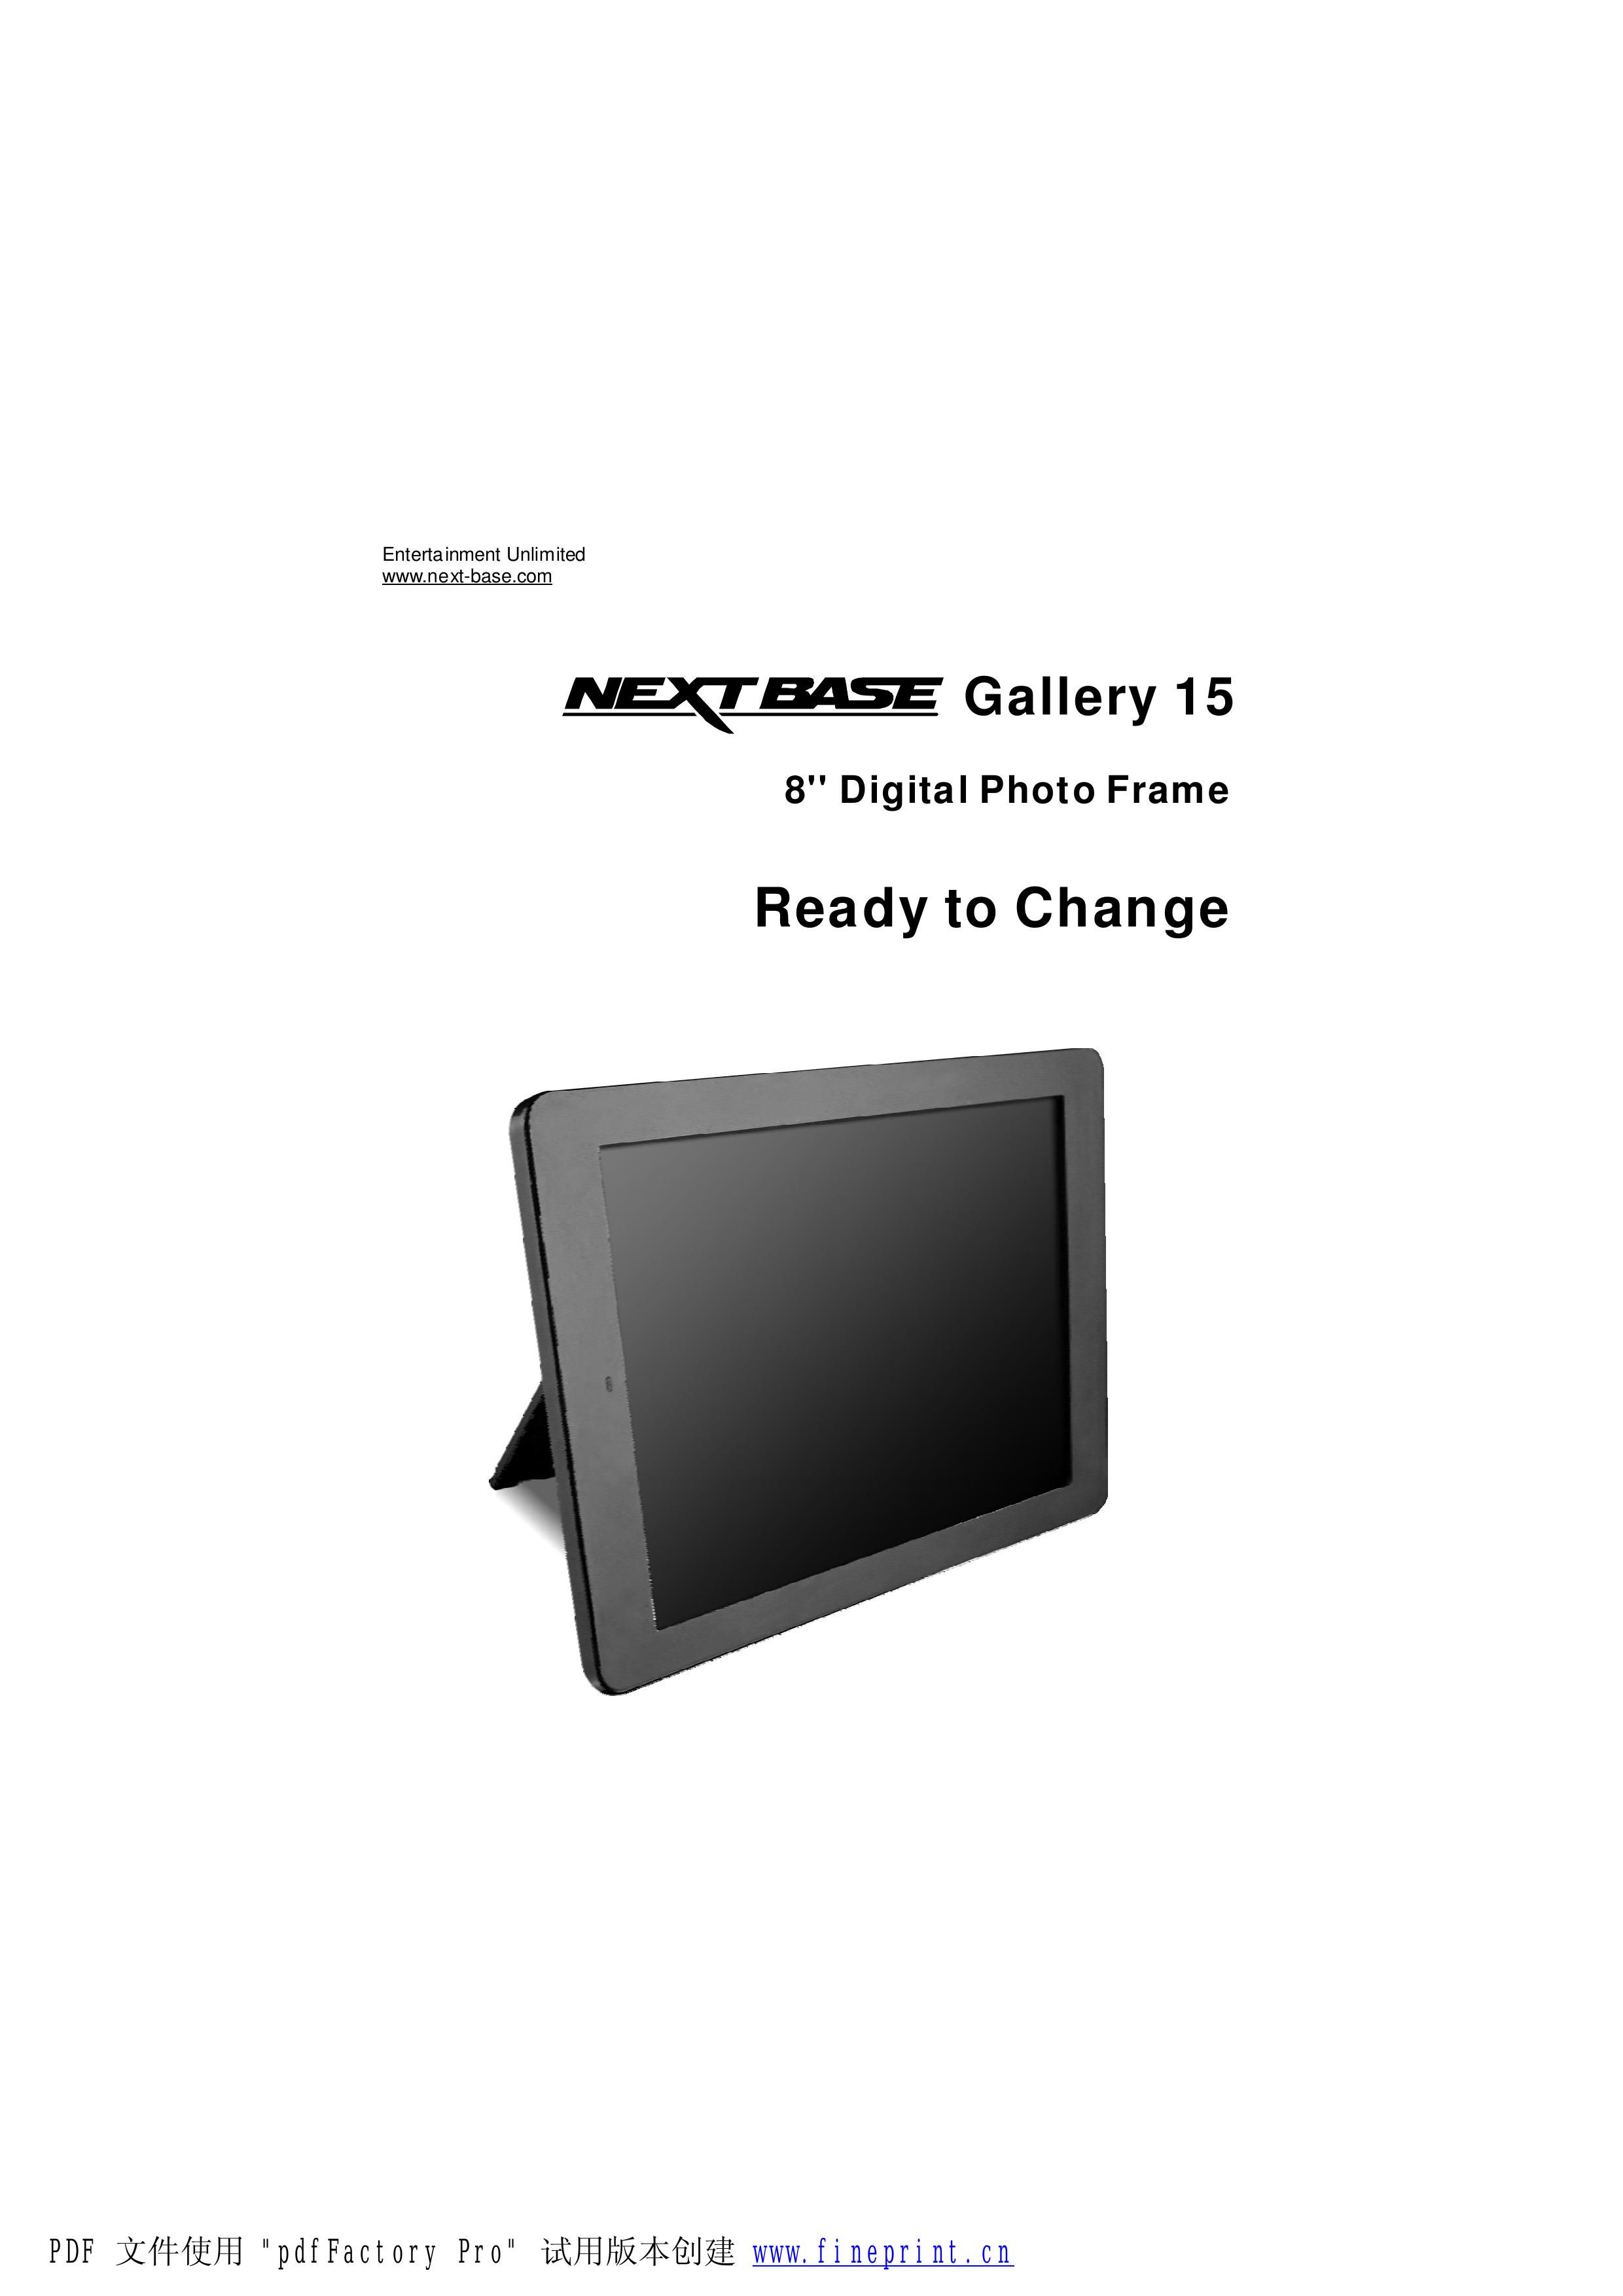 NextBase Gallery 15 Digital Photo Frame User Manual